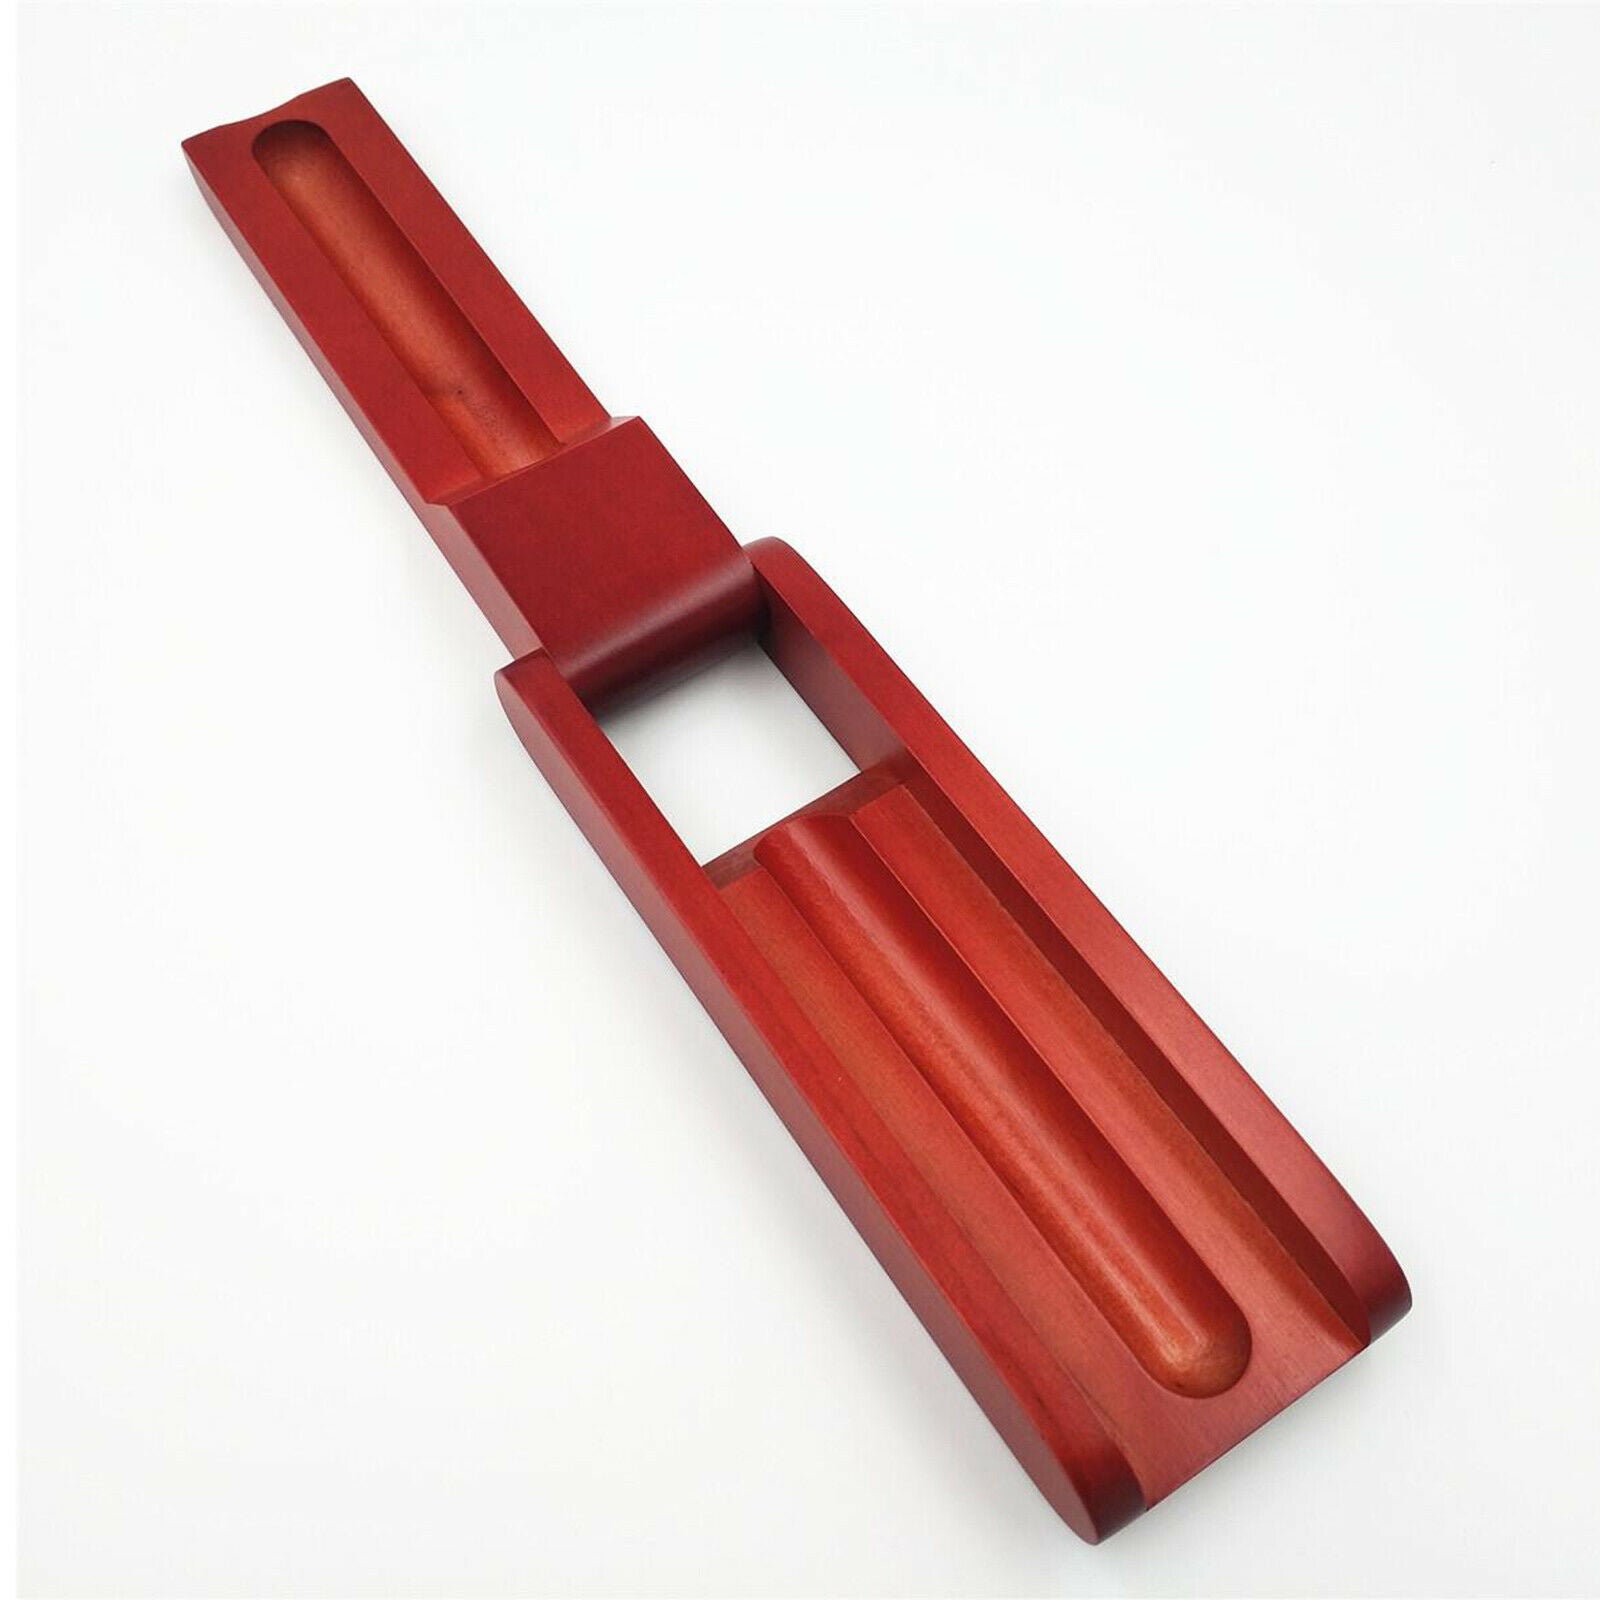 Polished Wooden Fountainer Pen Ballpoint Pen Storage Box Holder for Women